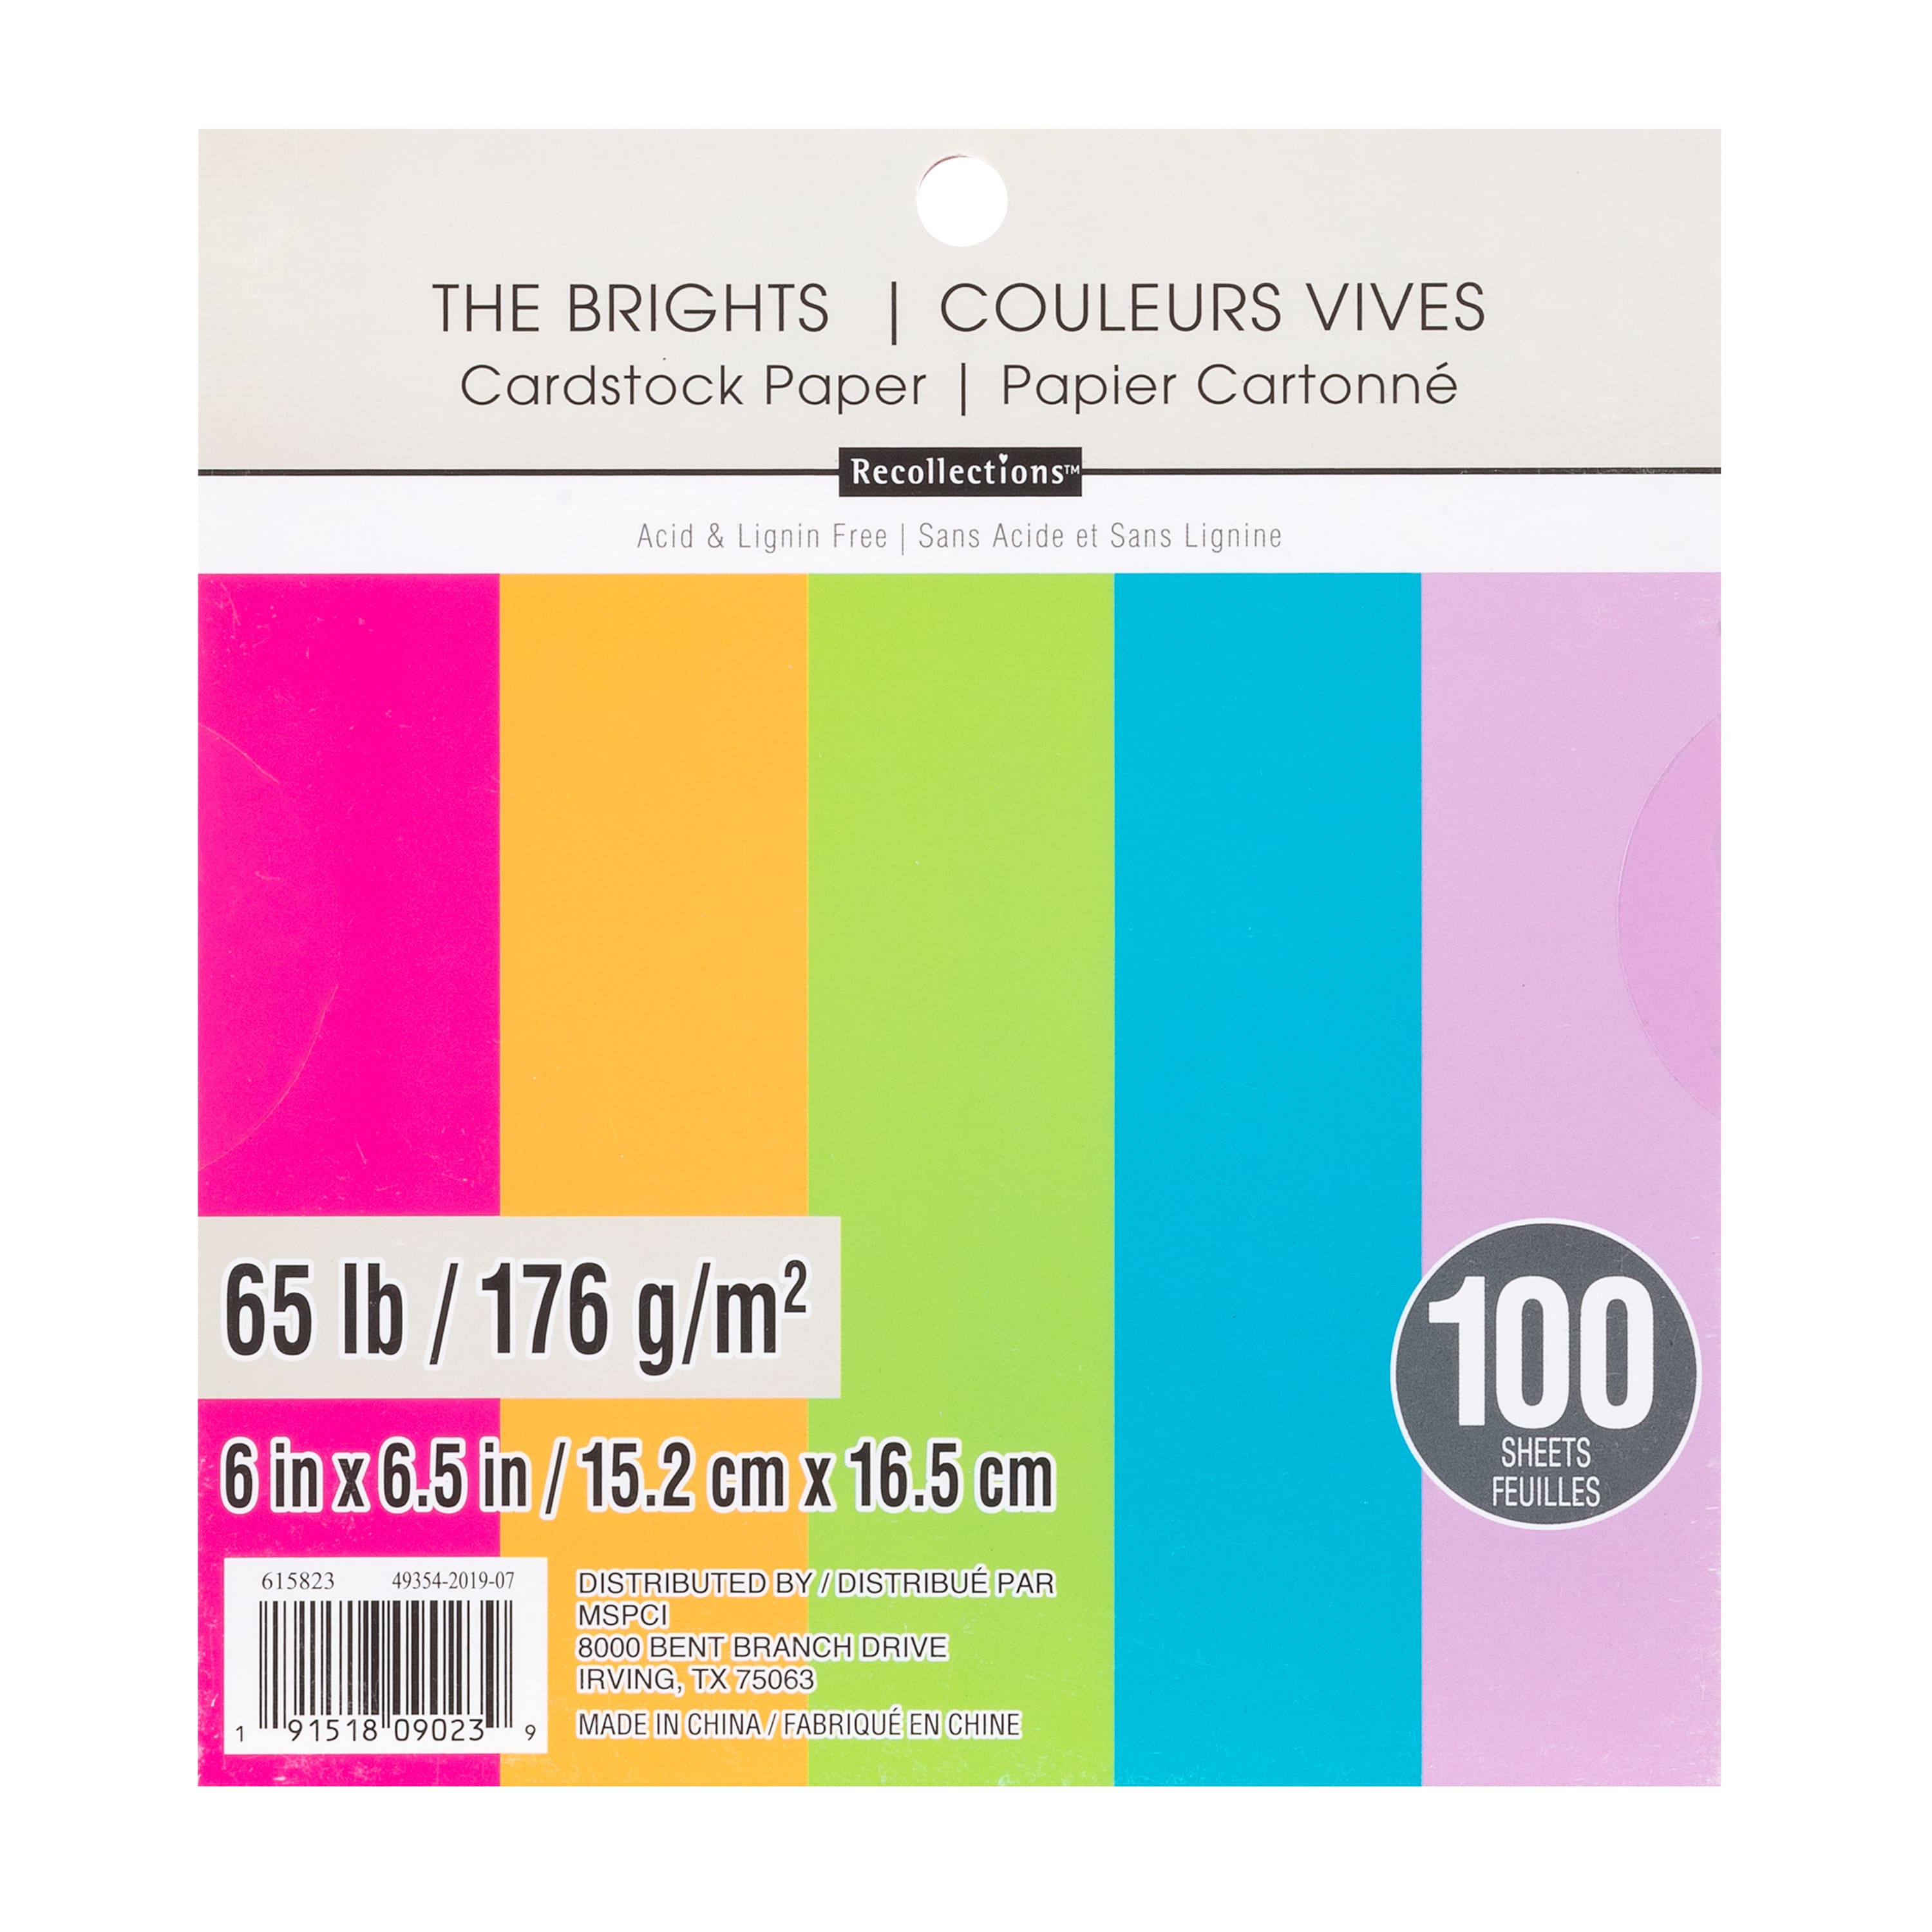 12 Packs: 100ct. (1,200 total) Kraft 6 x 6 Cardstock Paper by